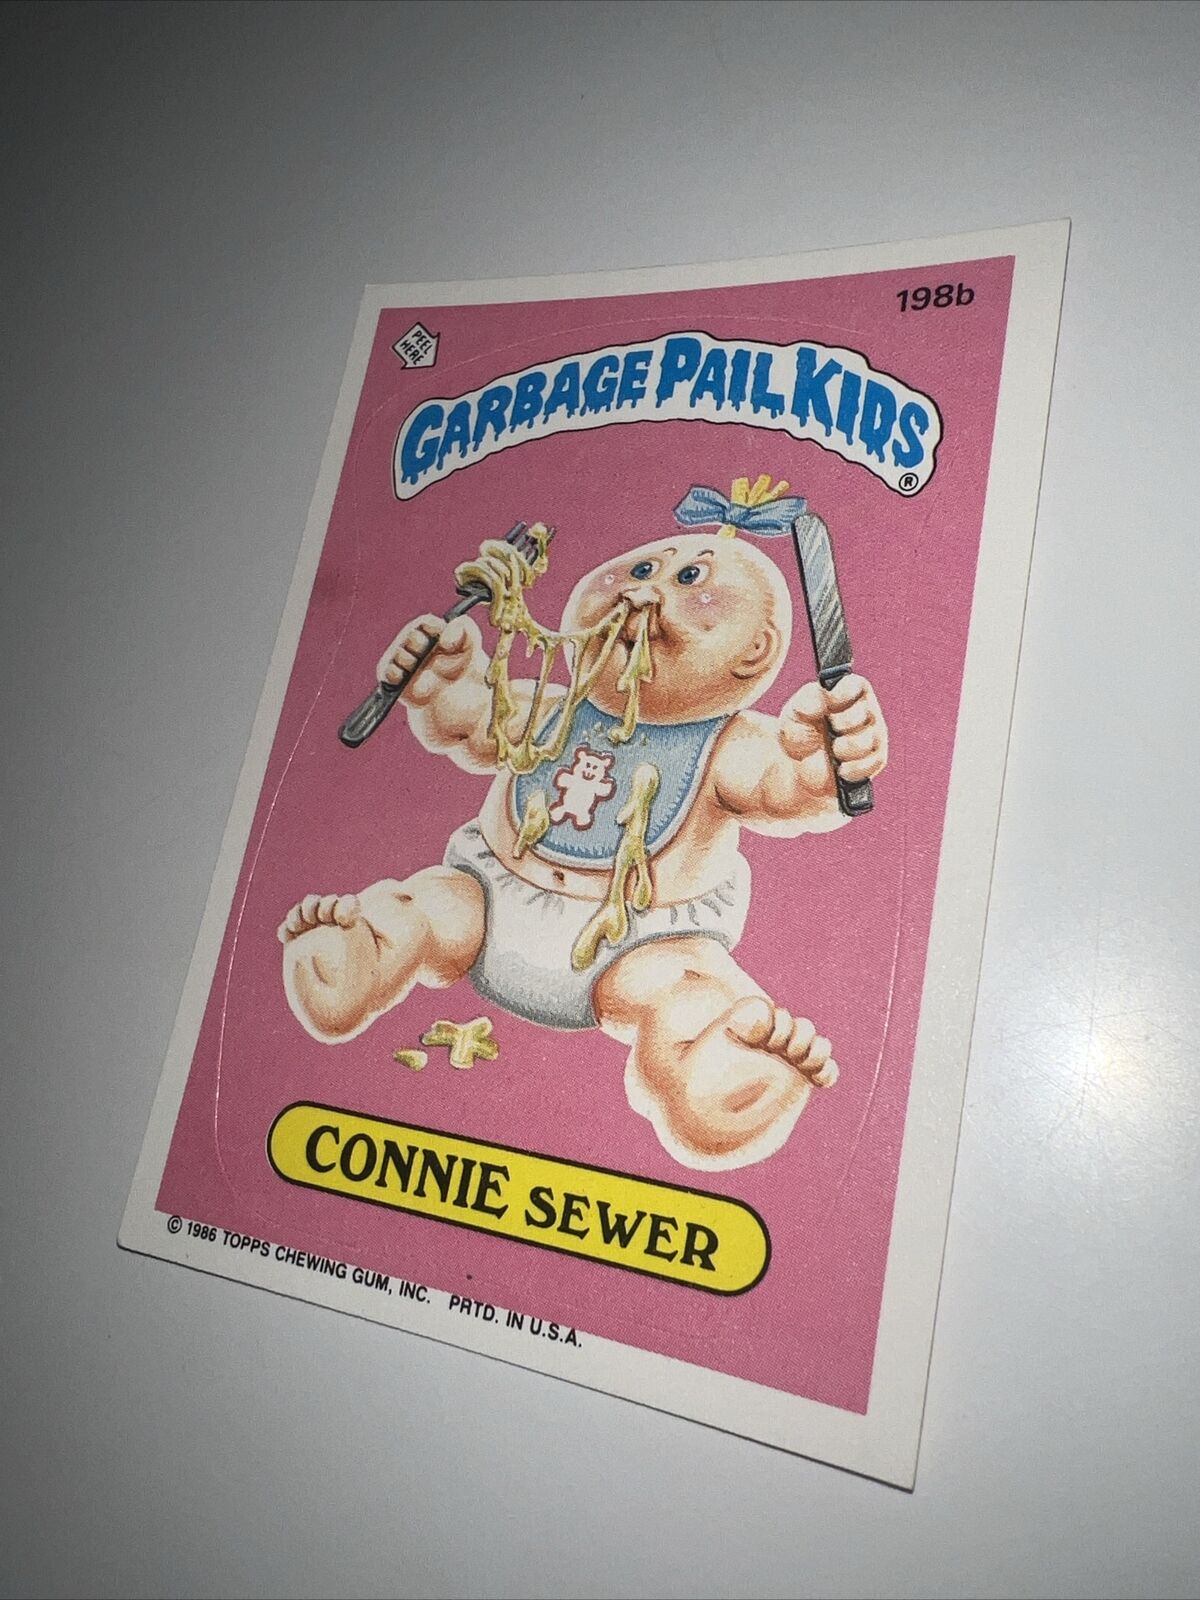 1986 Topps Garbage Pail Kids Card #198b CONNIE SEWER Original Series Vintage GPK